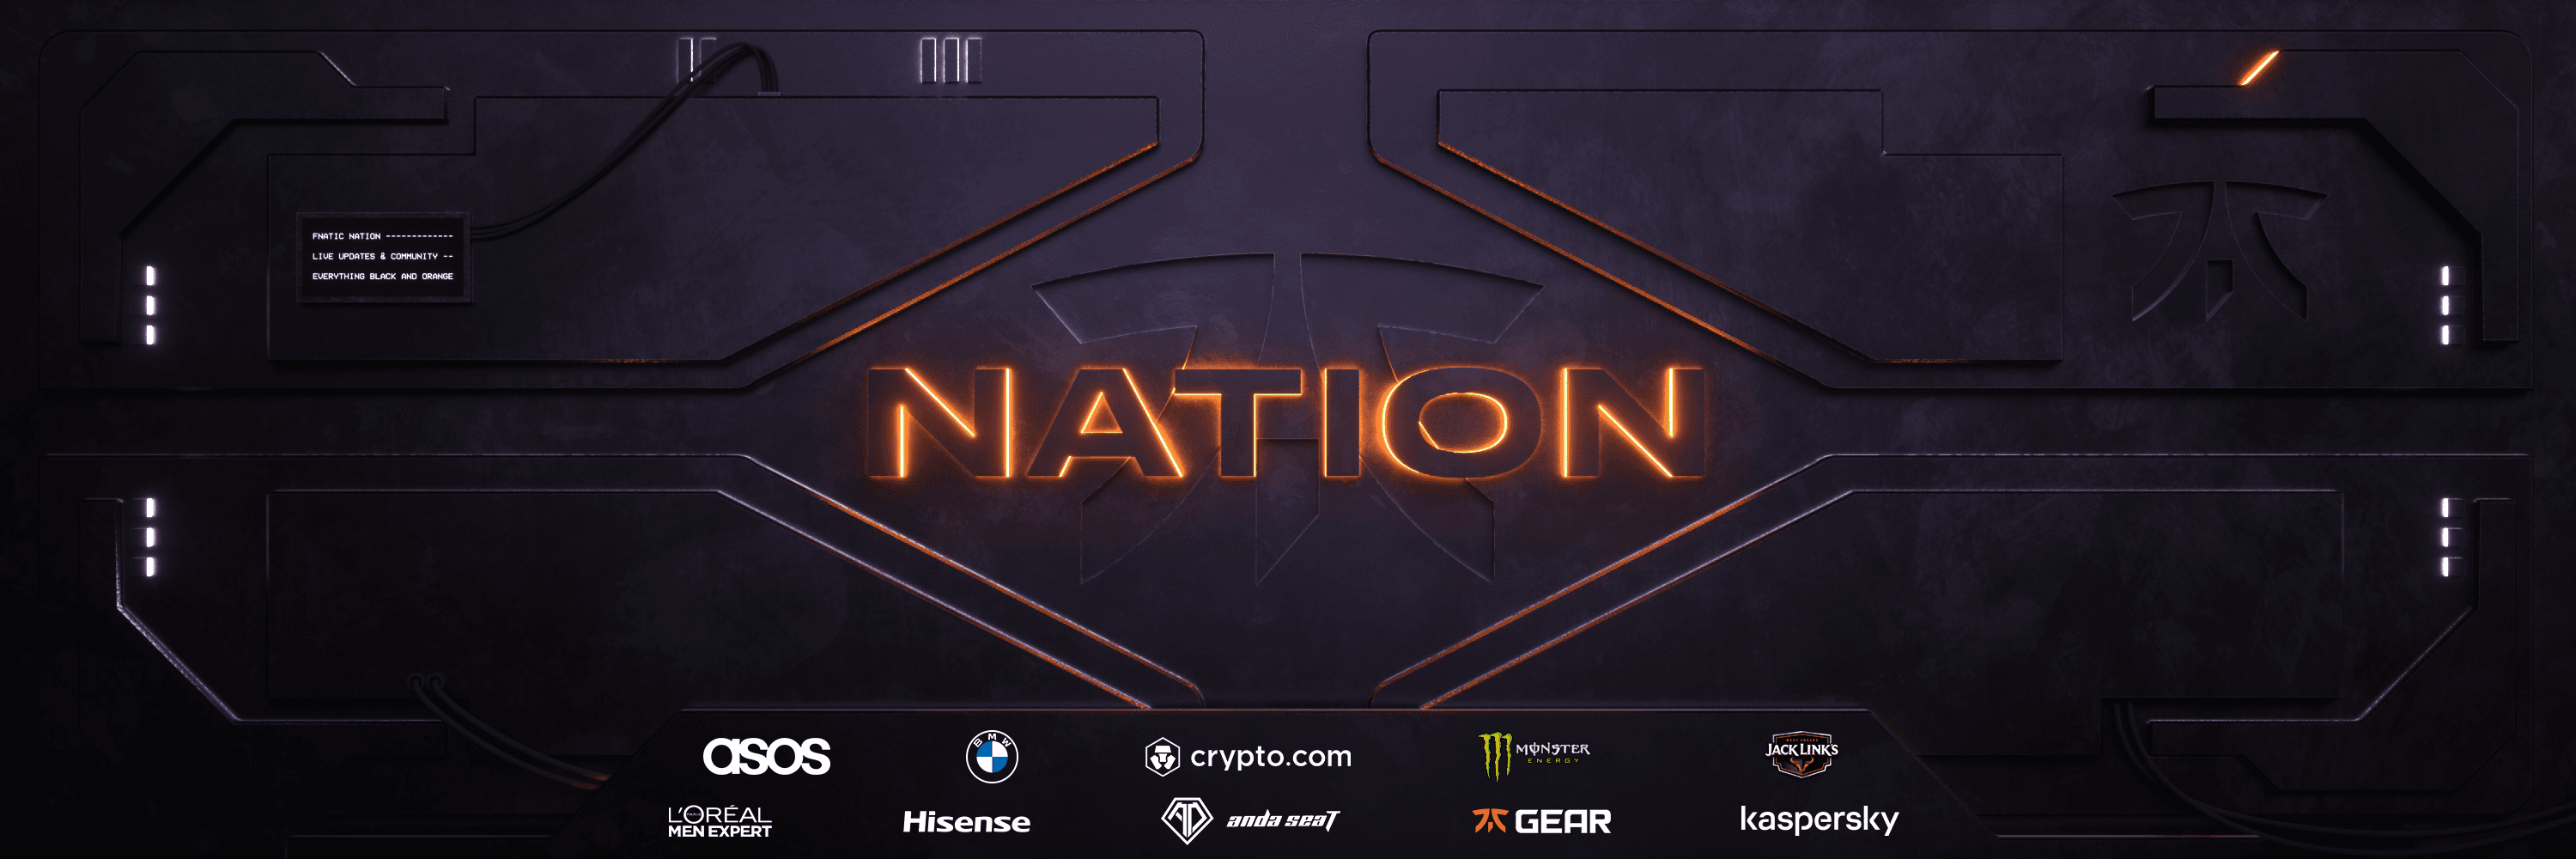 Citizen Key - Fnatic Nation